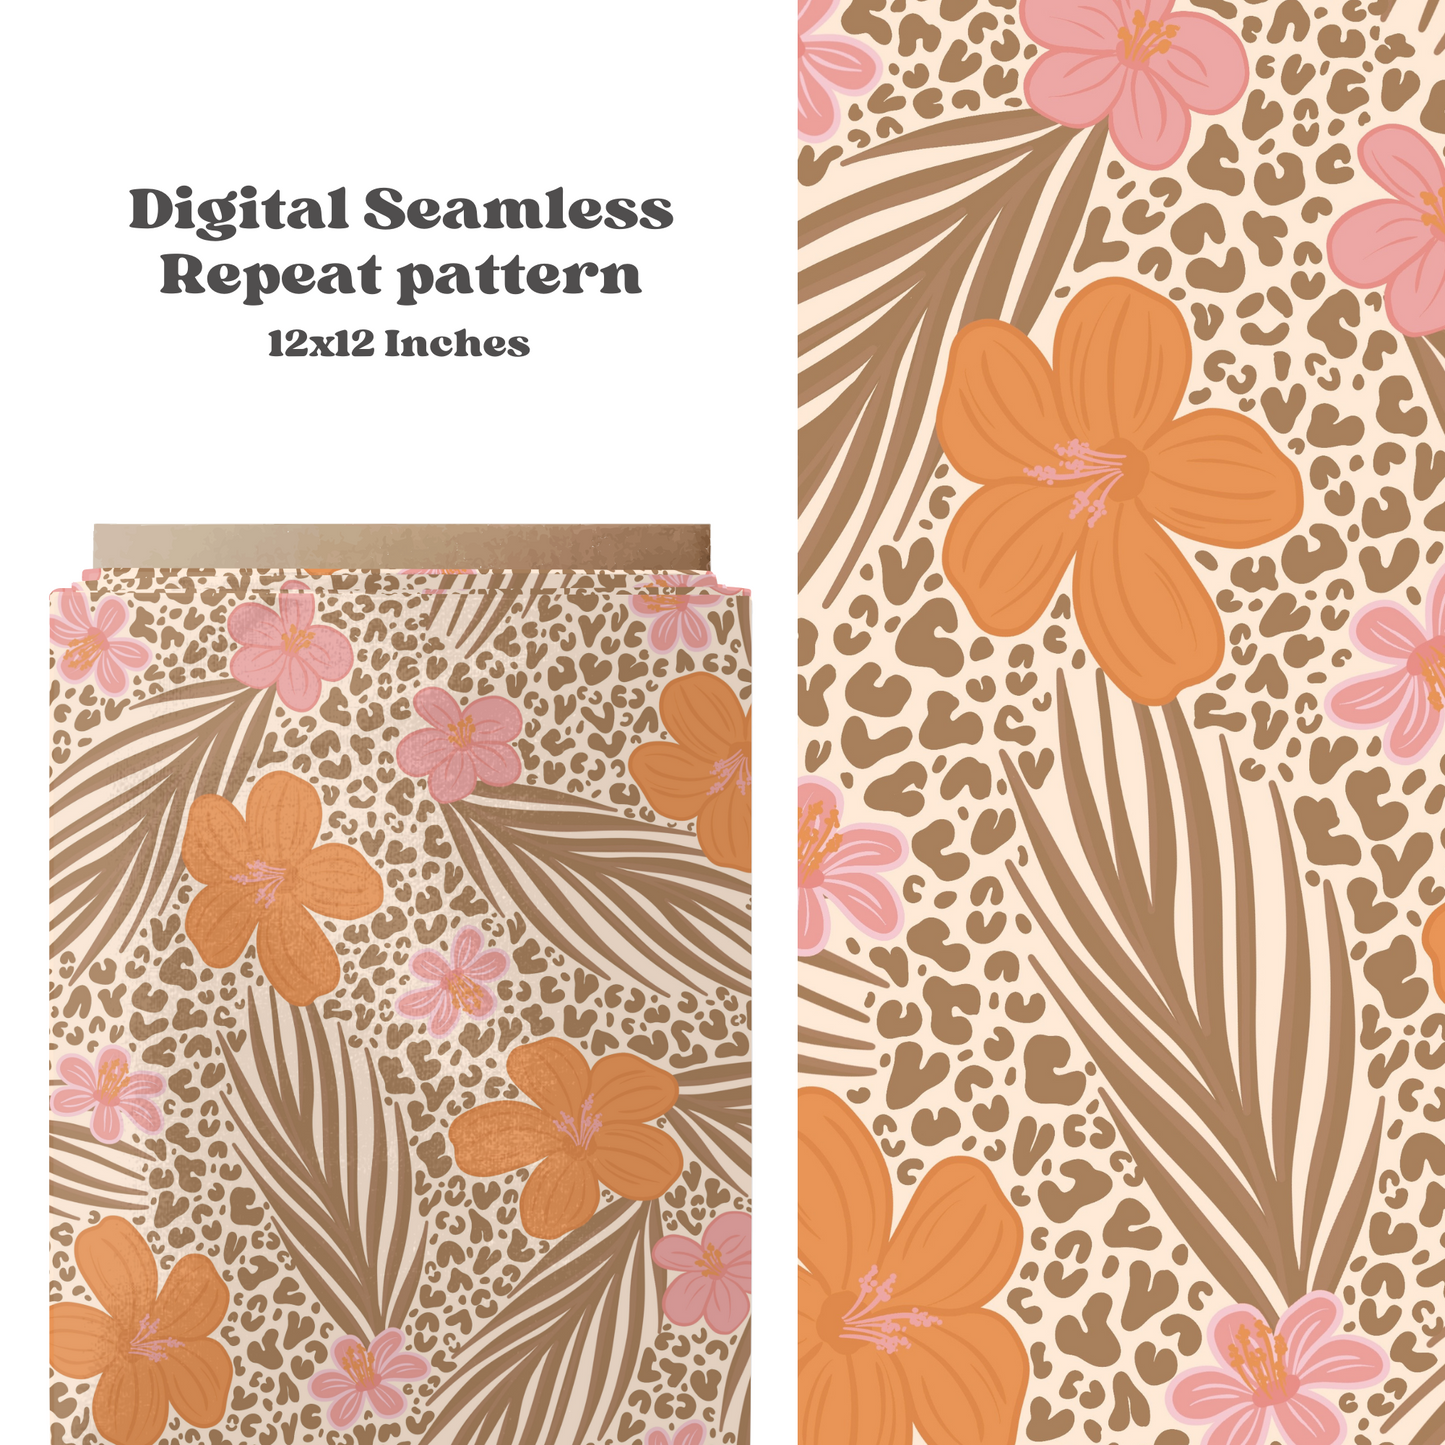 Hibiscus Leopard Floral Pattern